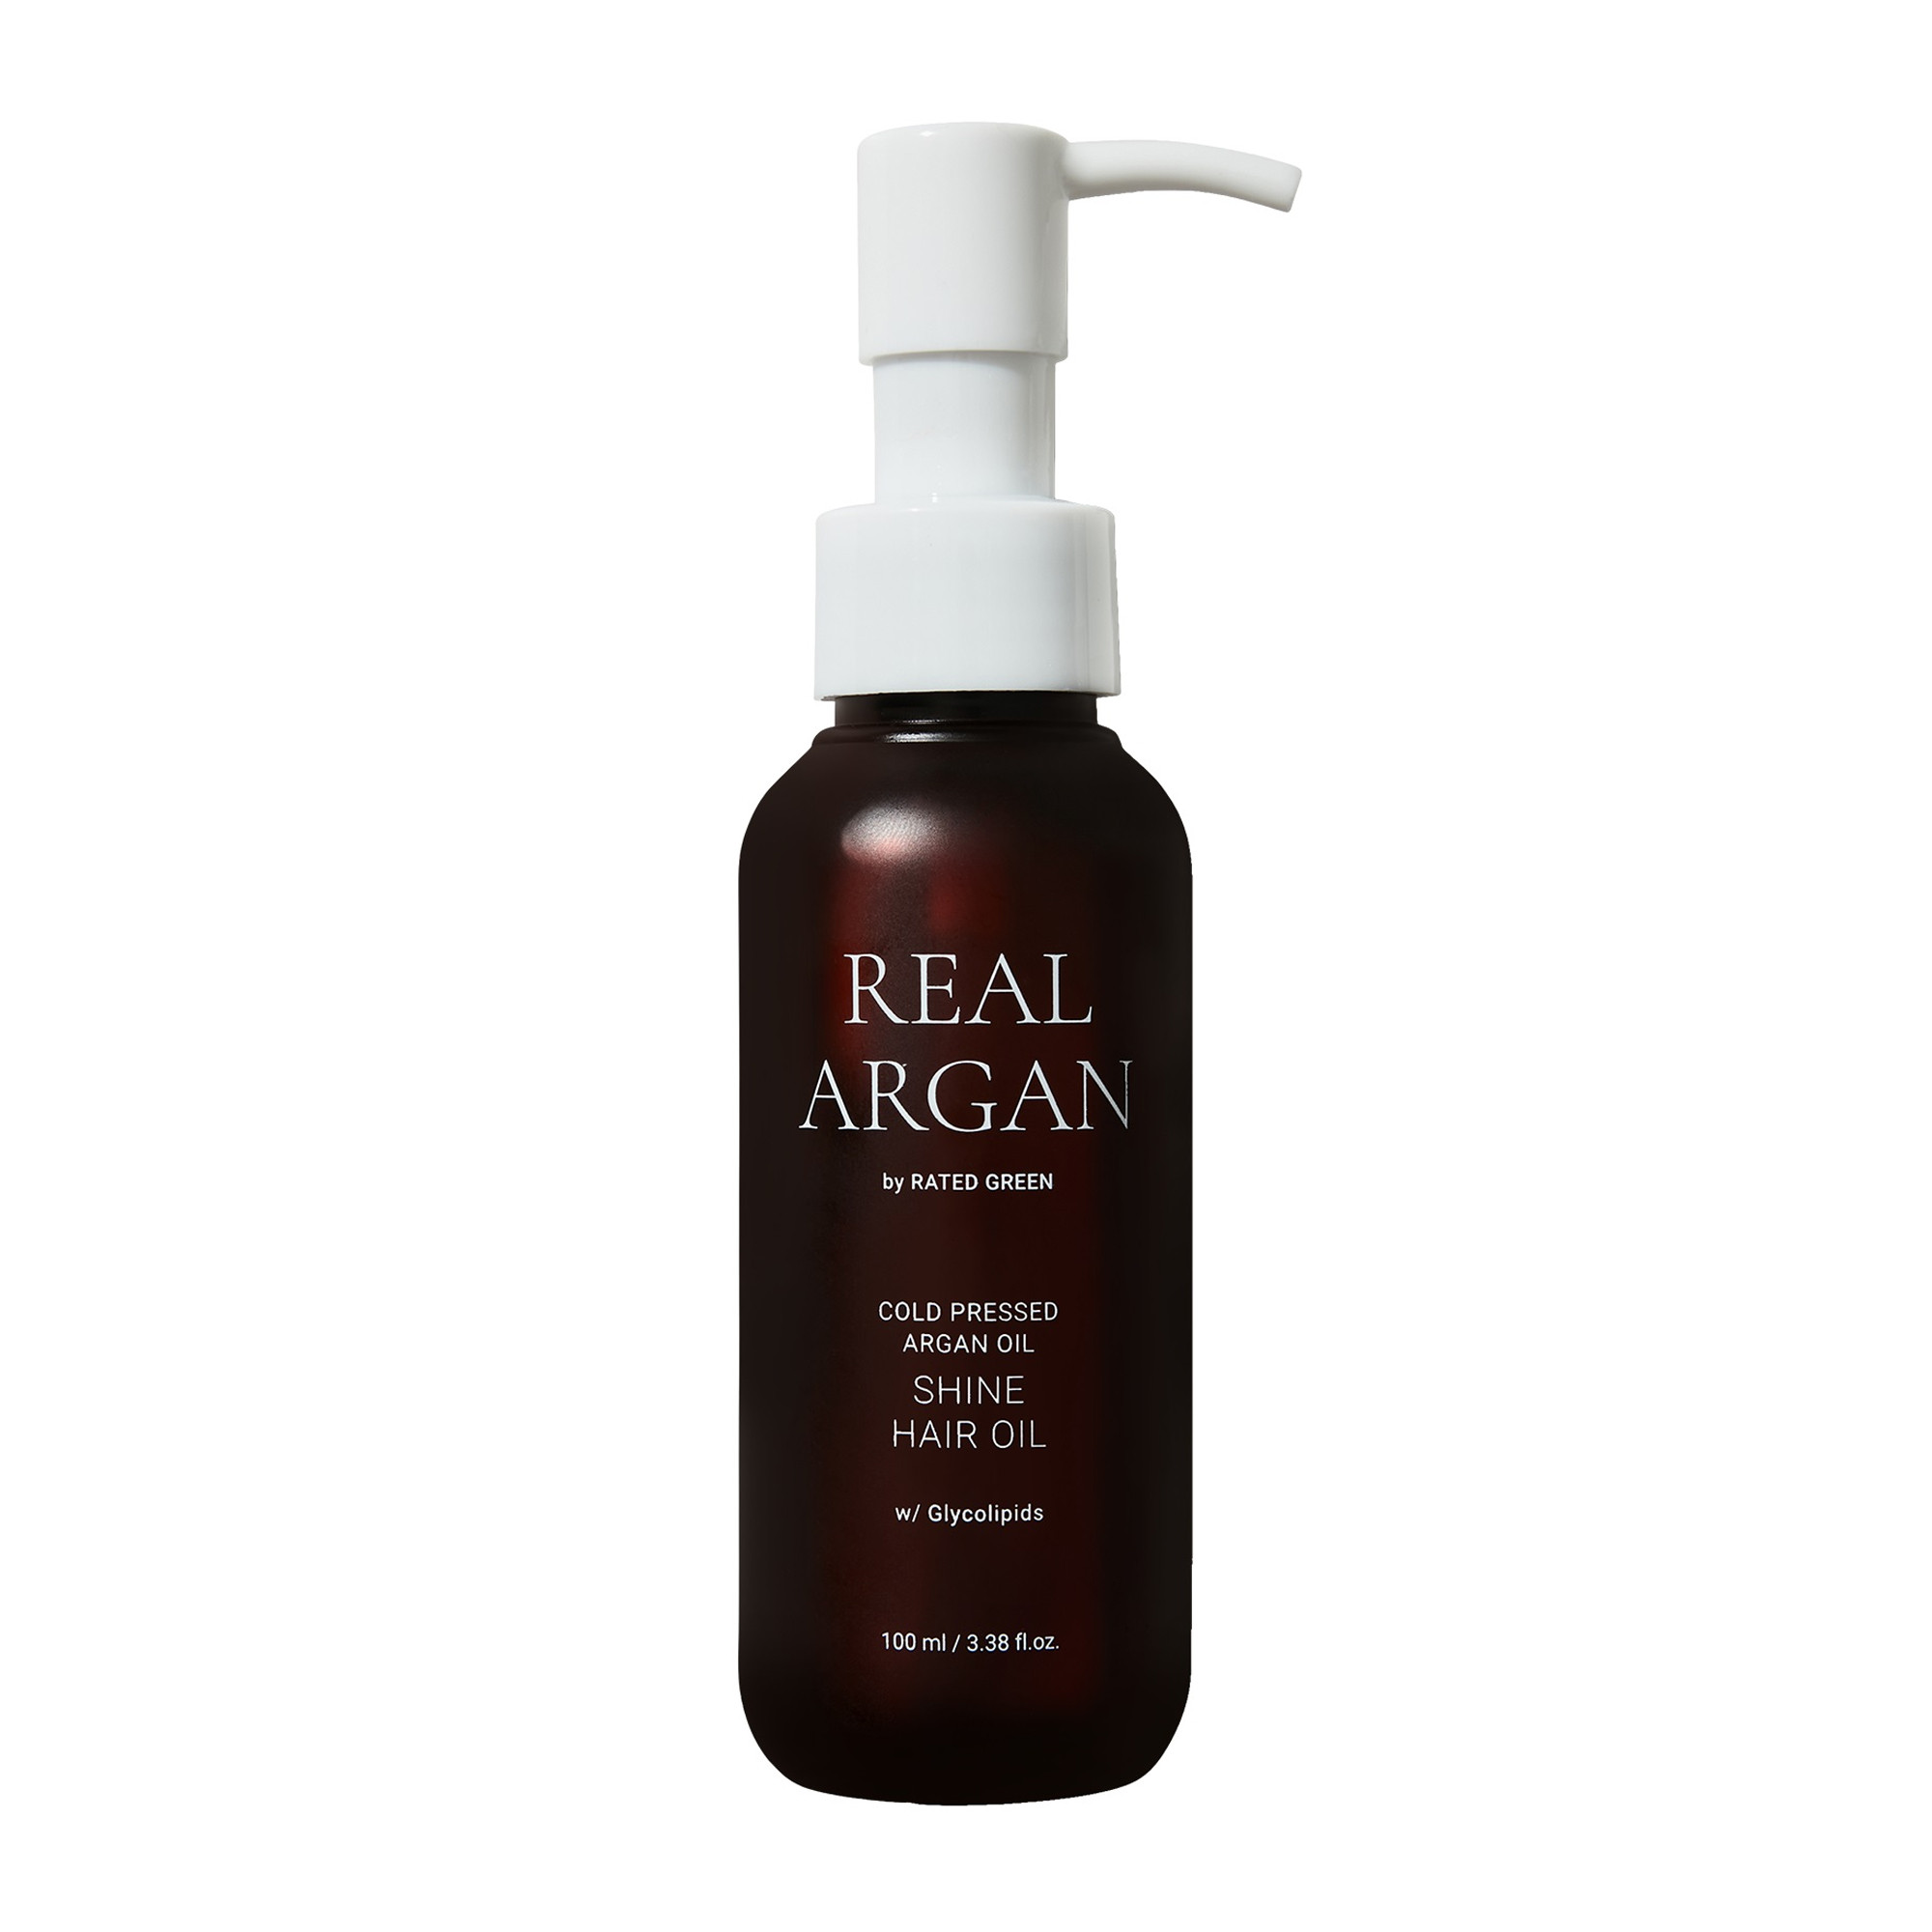 Rated Green Real Argan Shine Hair Oil - Аргановое масло для волос